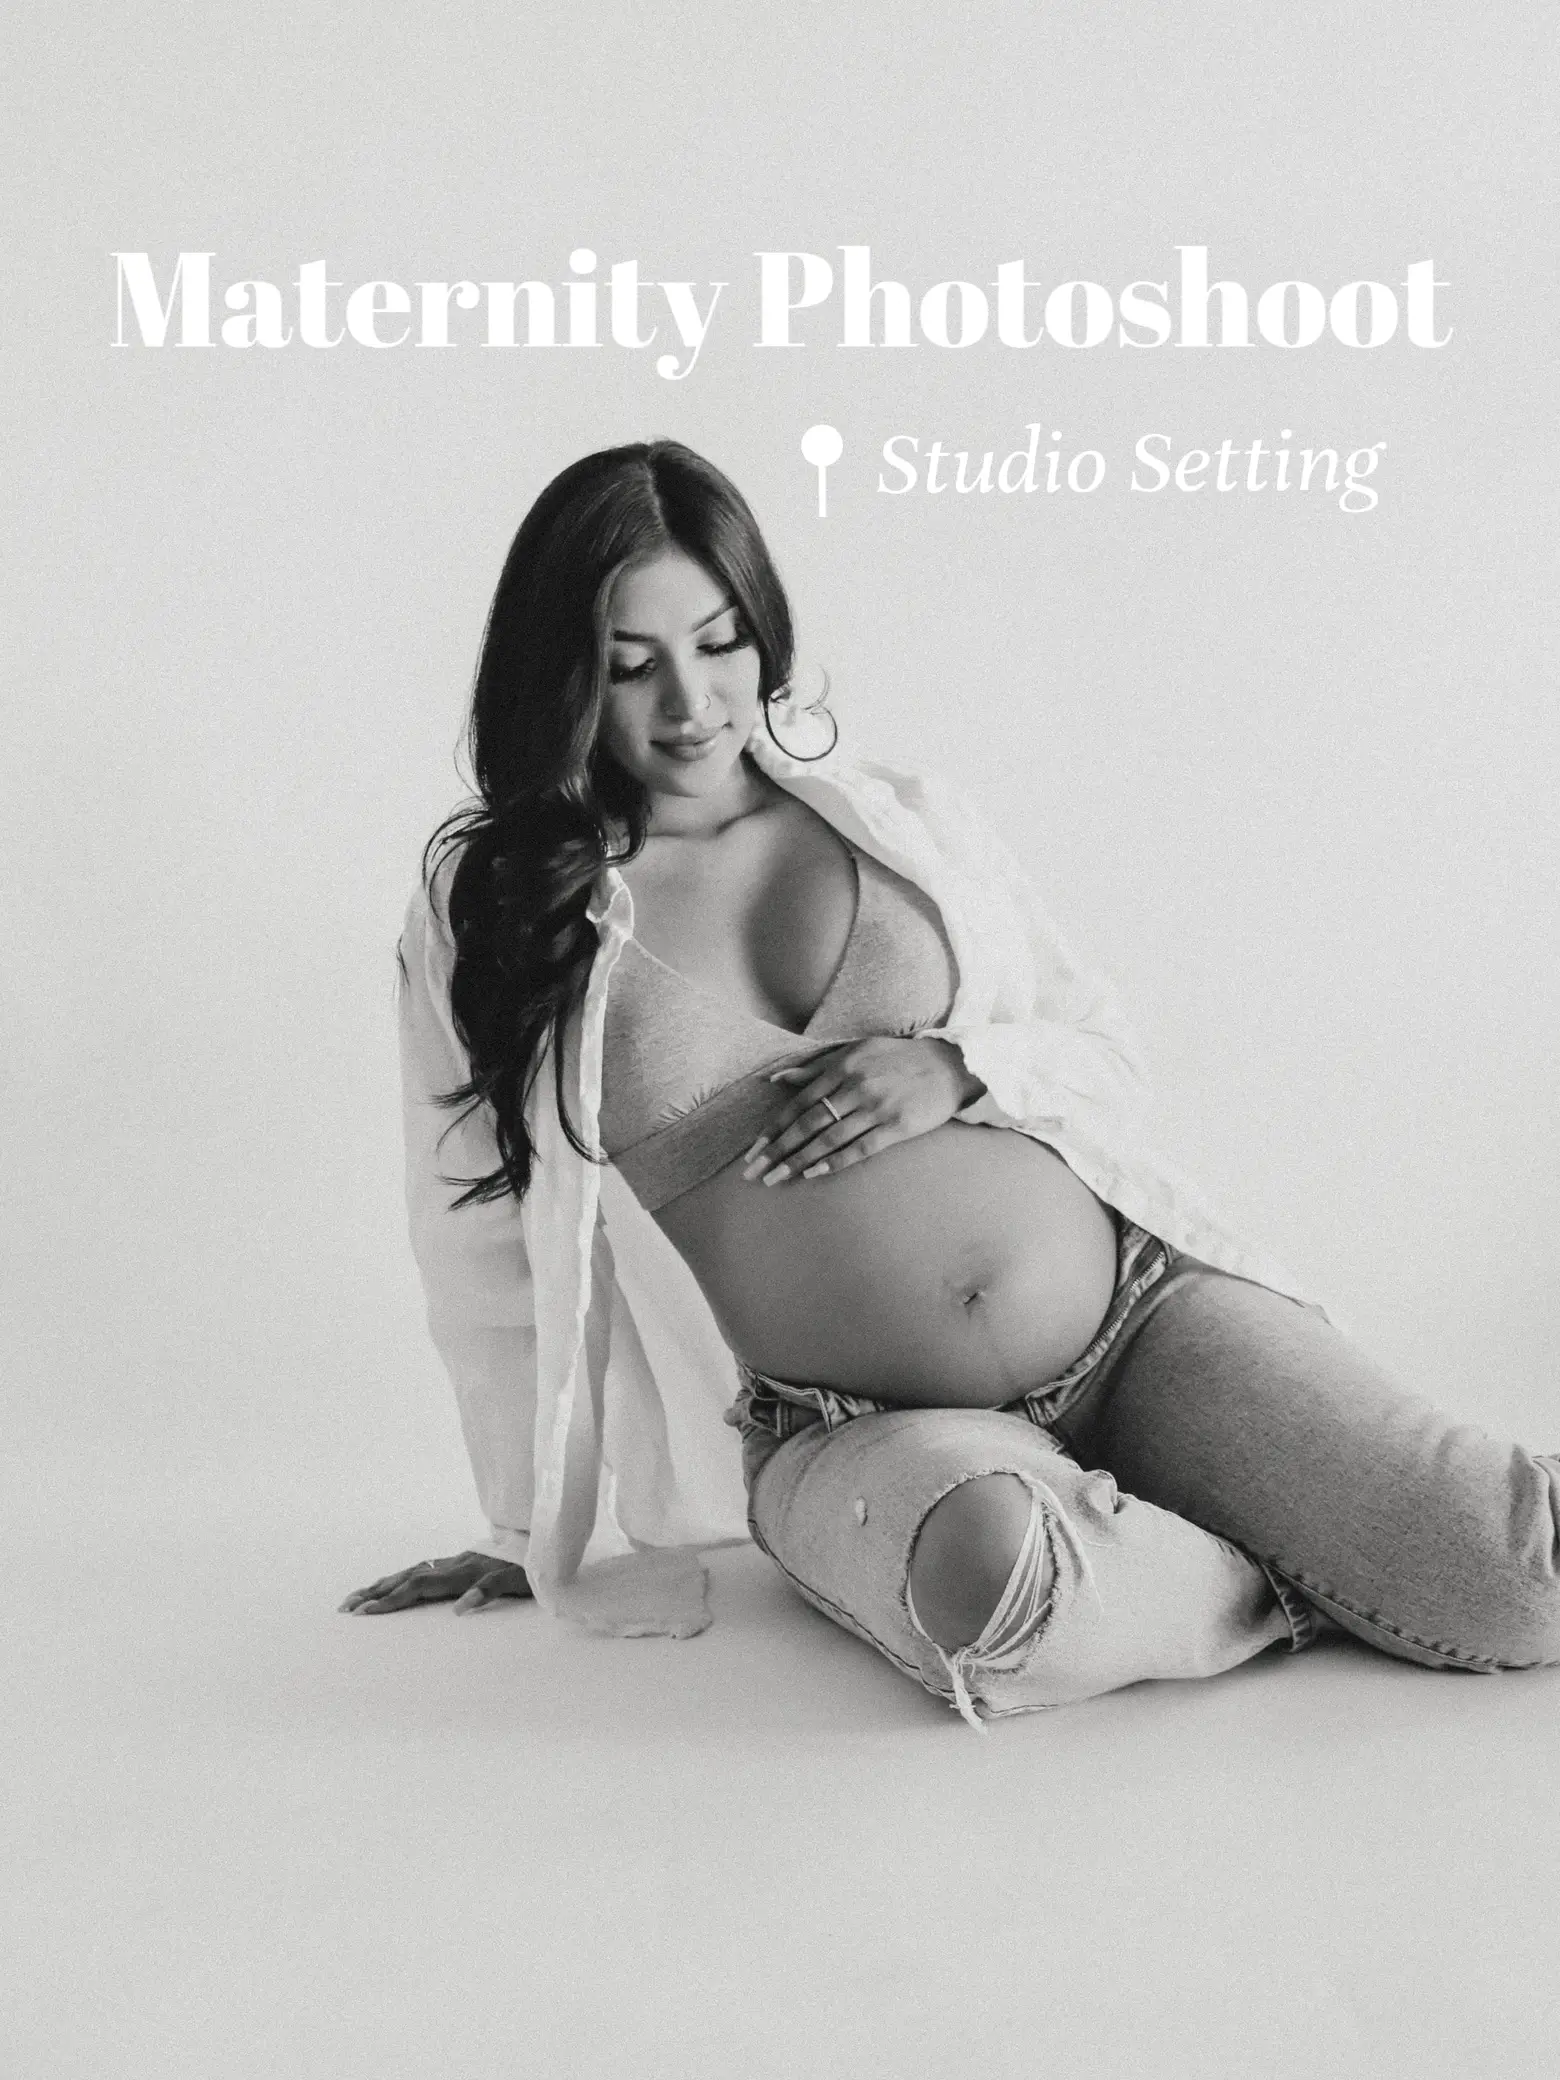 Jc Penney Maternity Photos - Lemon8 Search